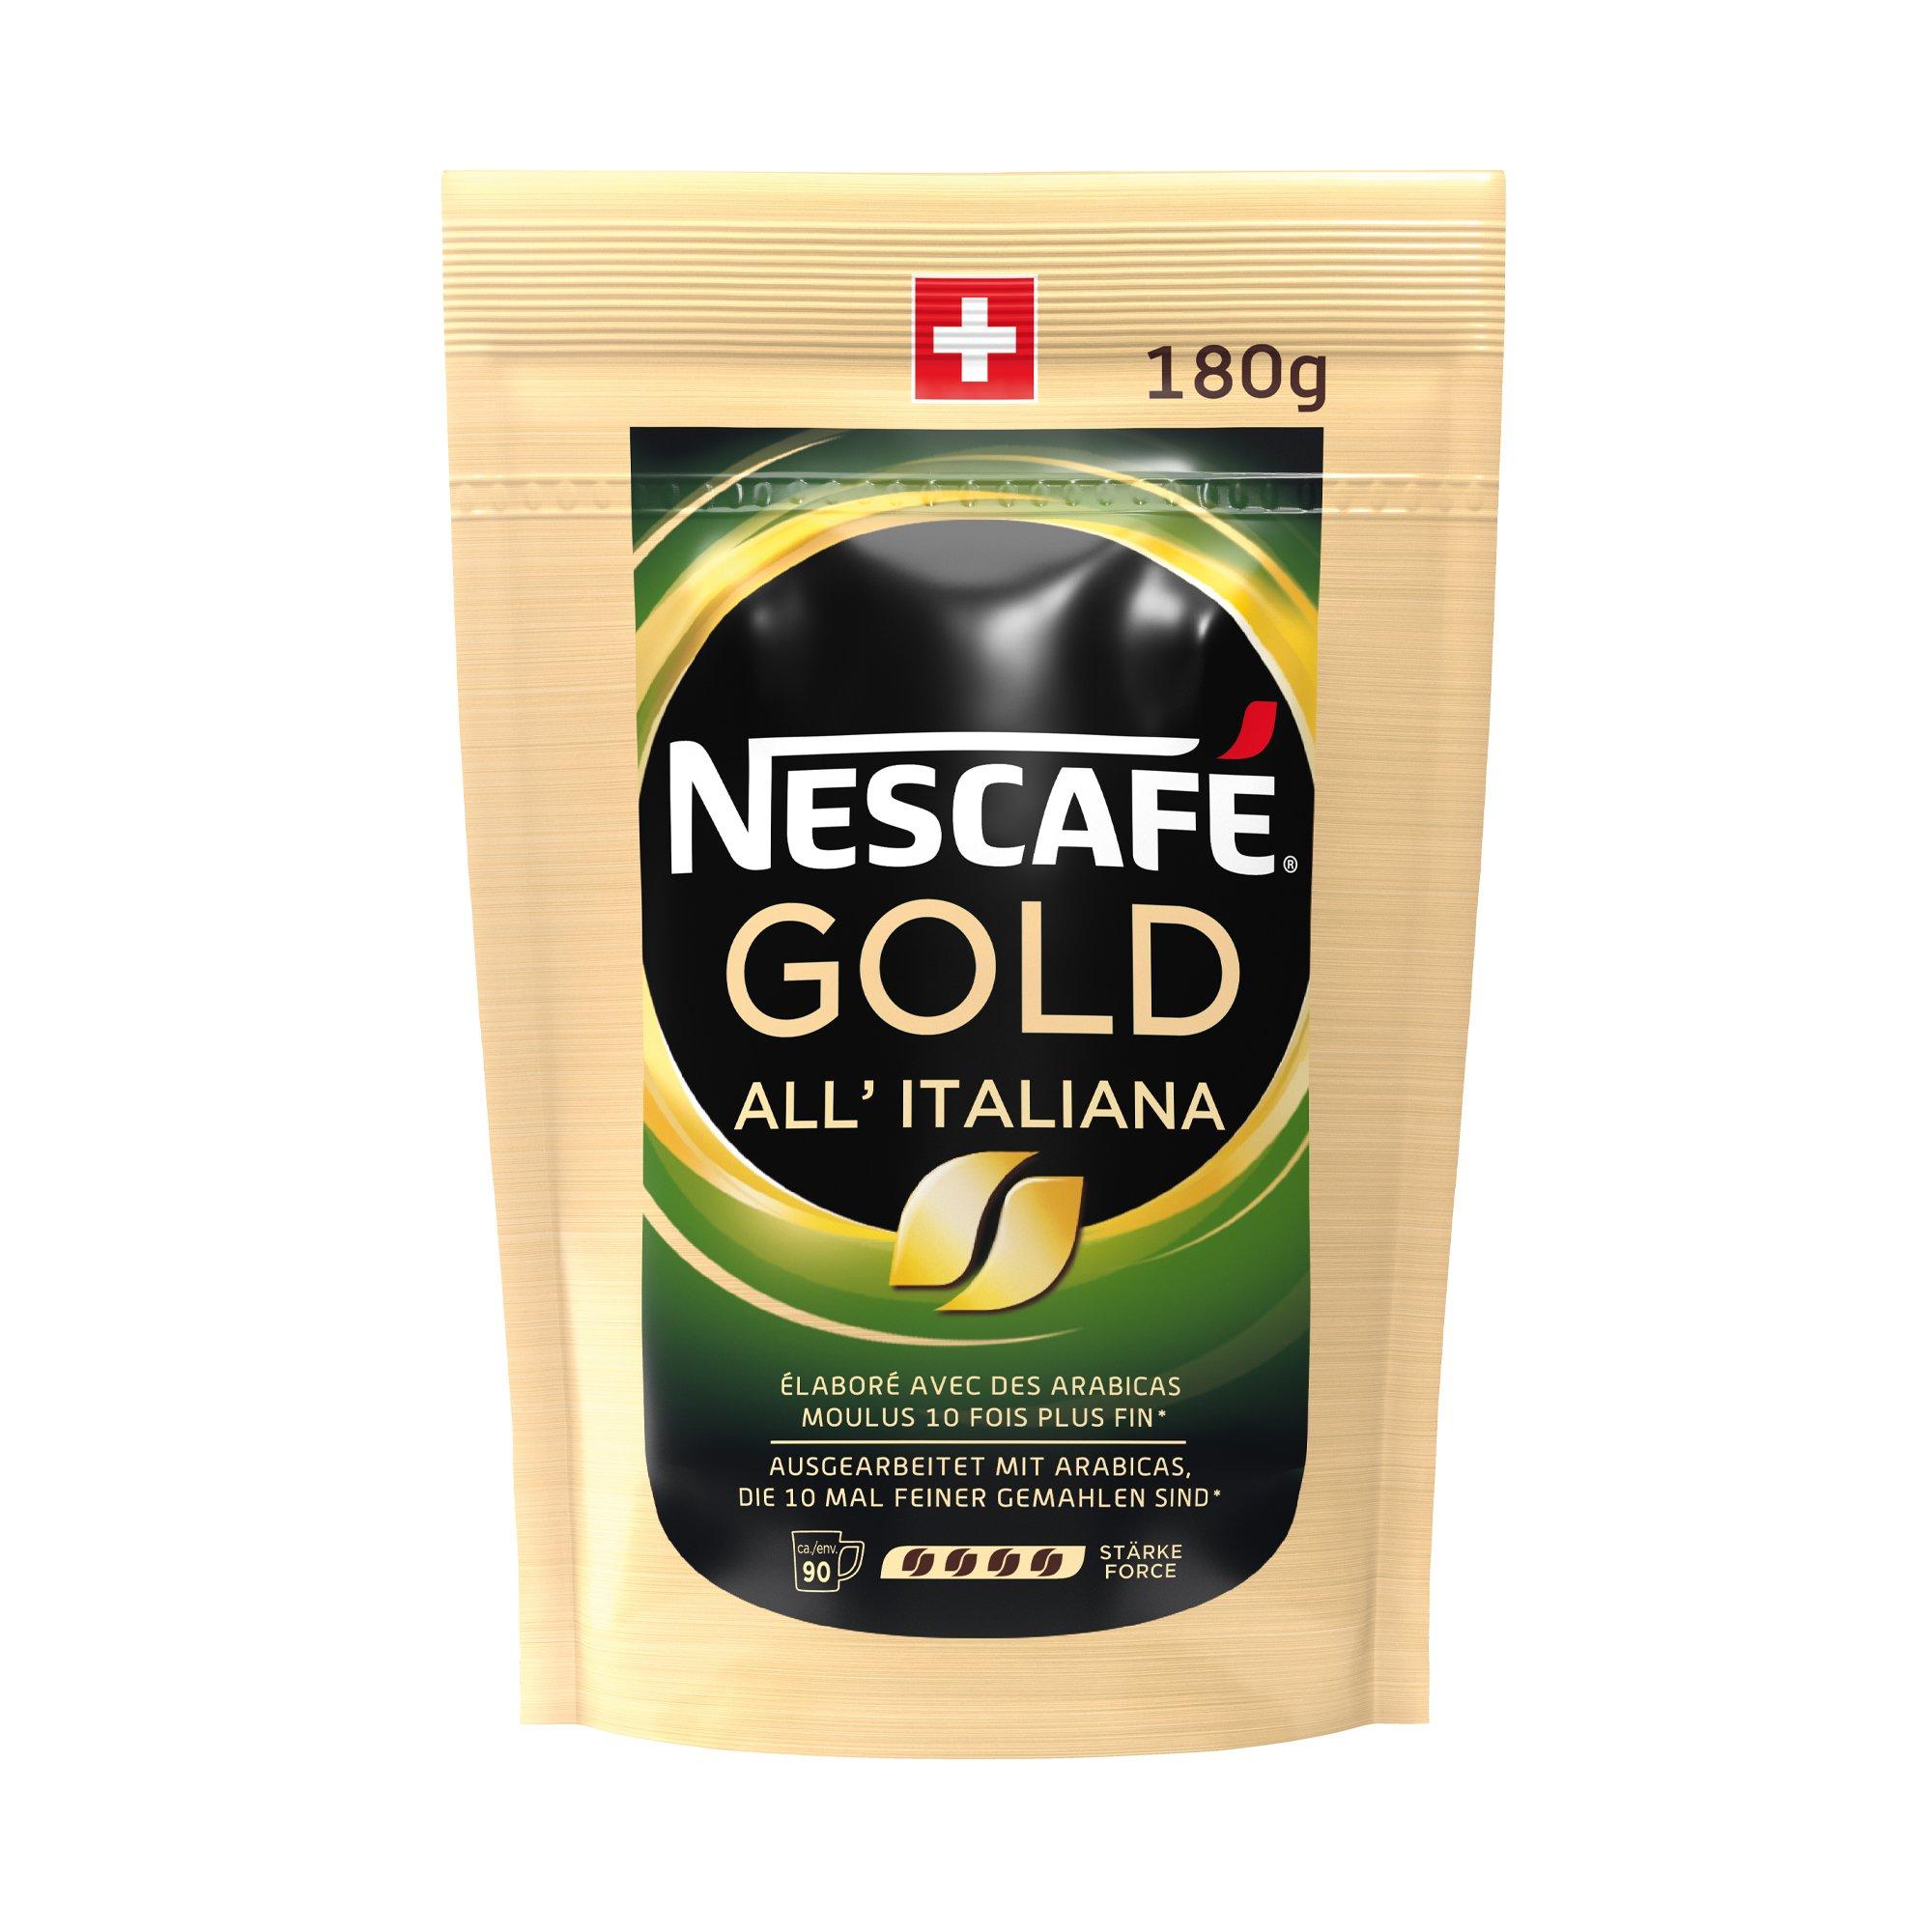 Image of NESCAFE Gold all' Italiana - 180g